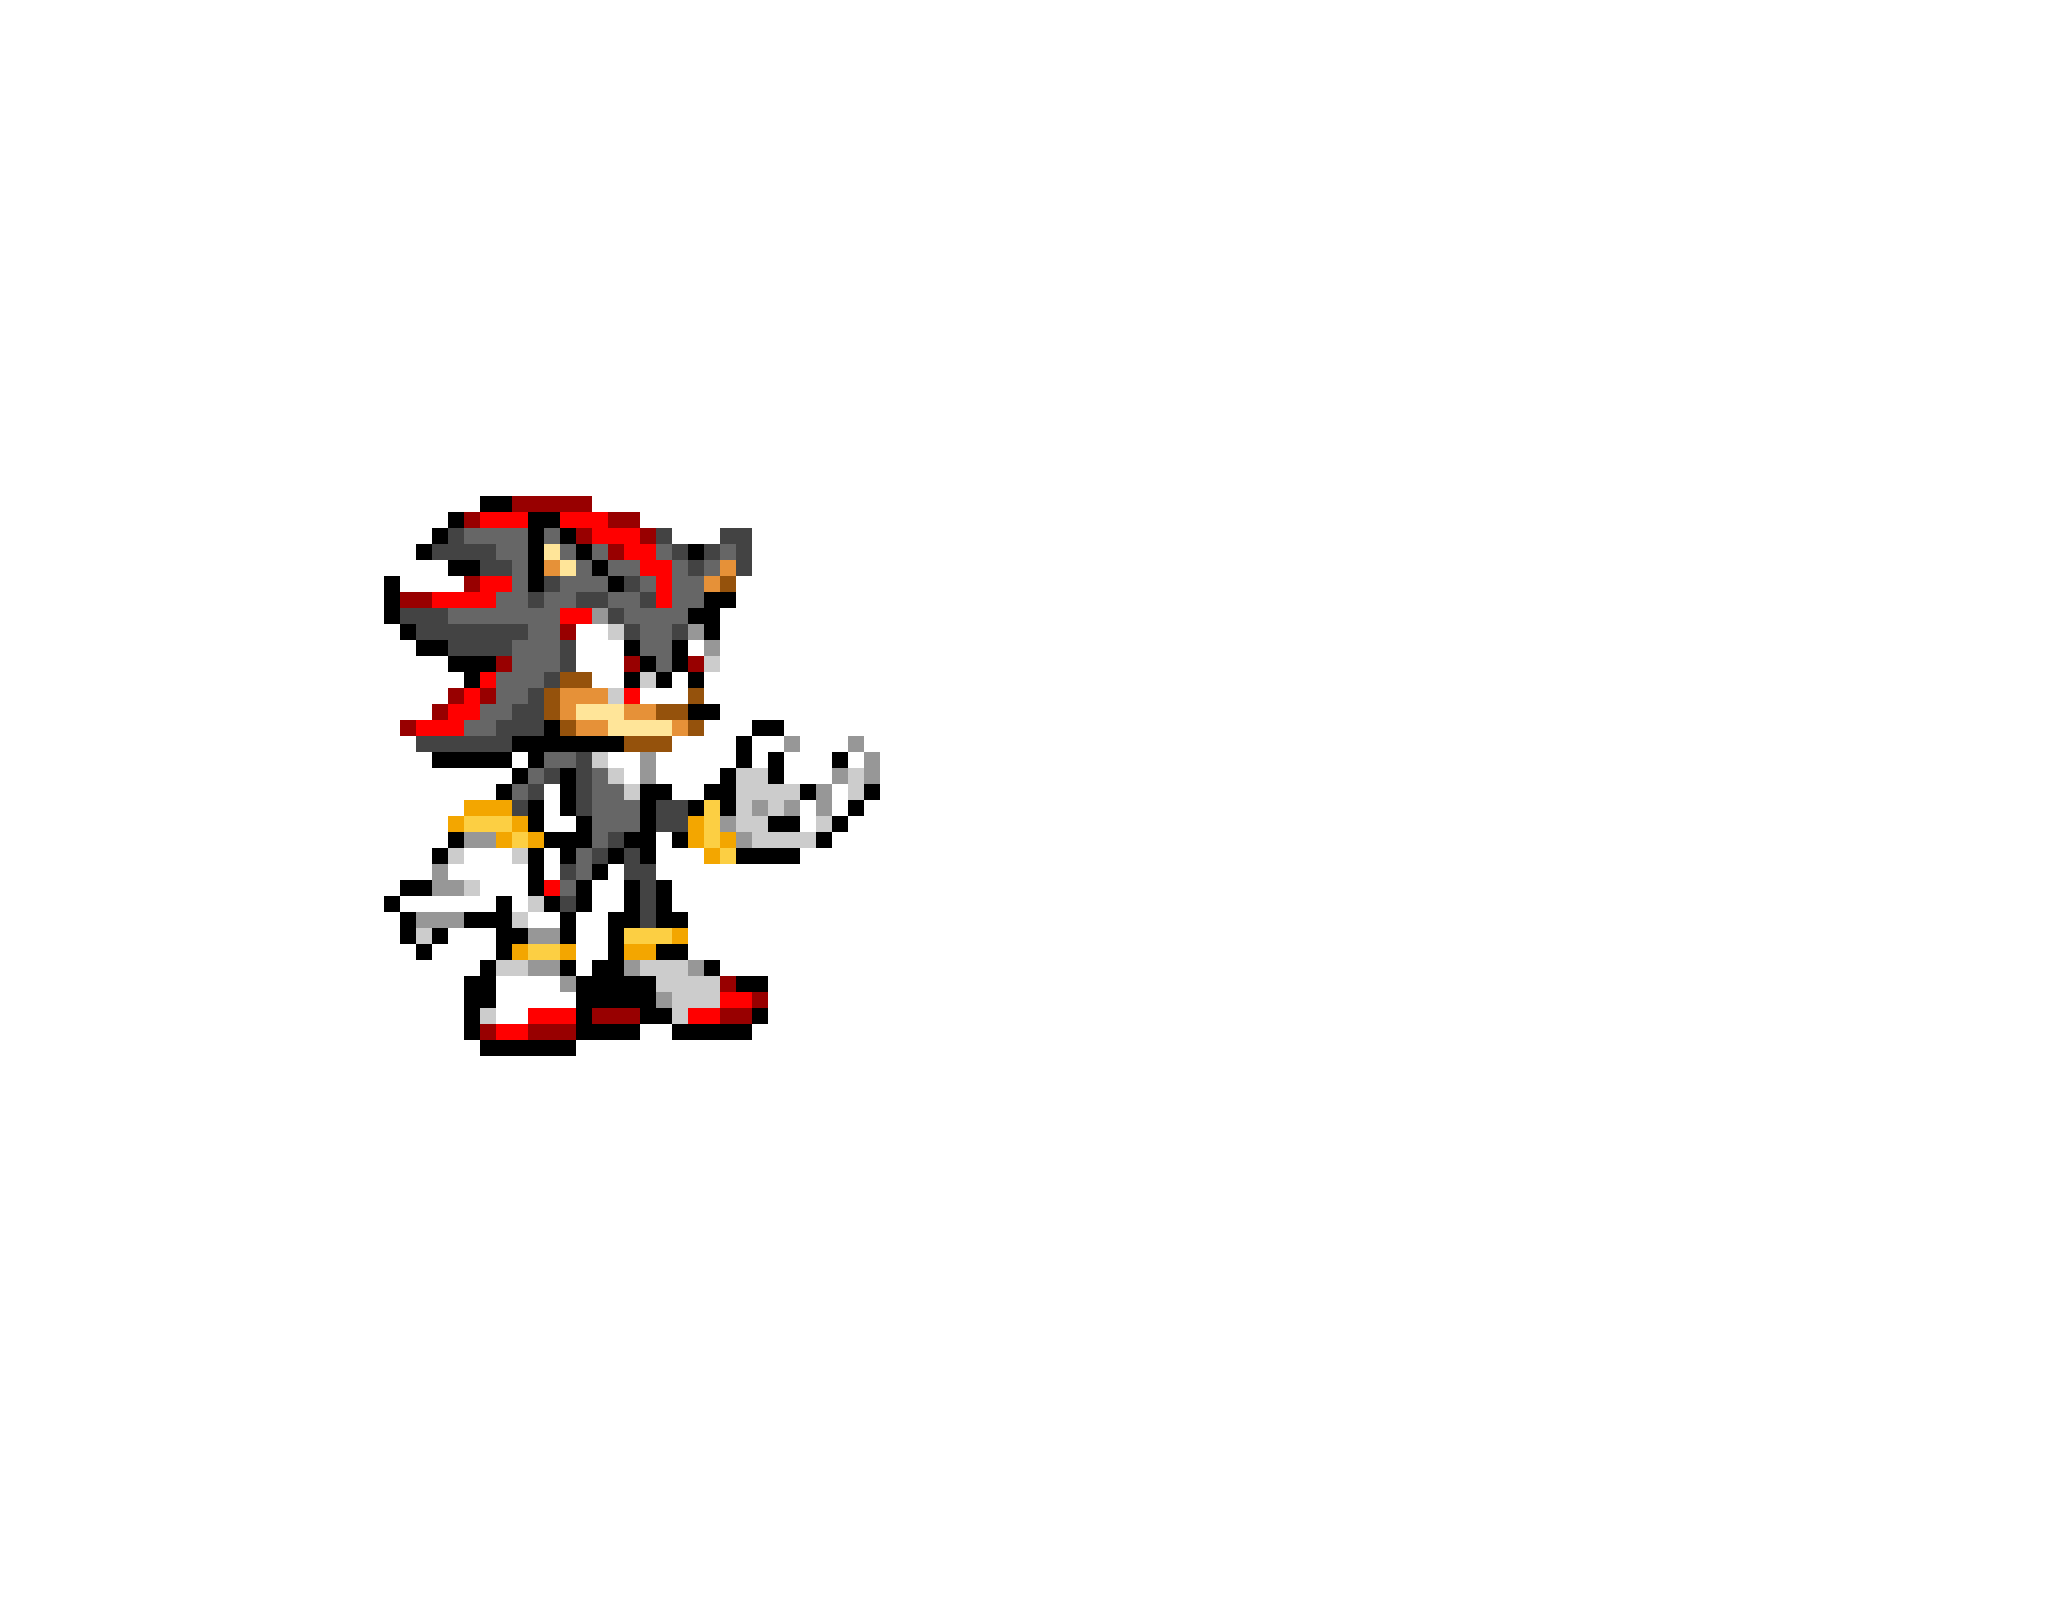 Shadow the Hedgehog (Sonic the Hedgehog)